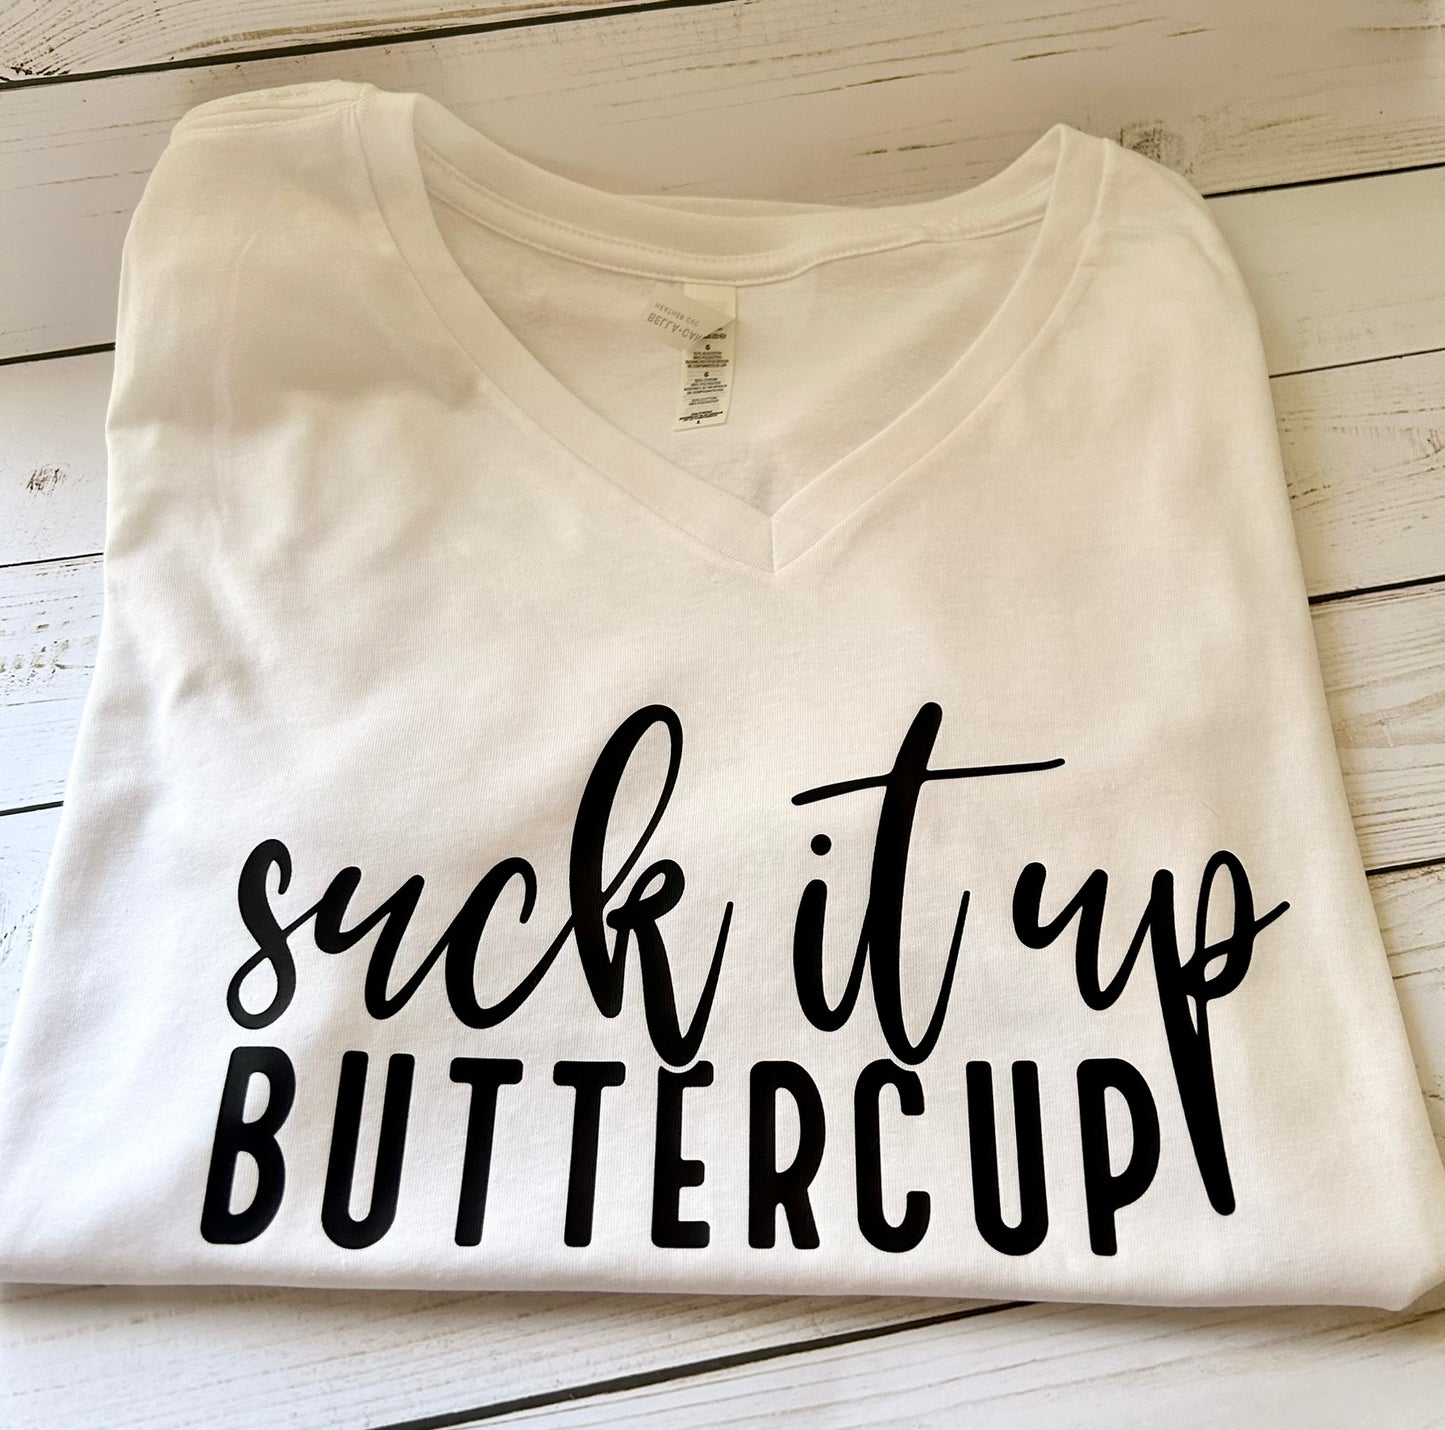 Suck It Up Buttercup!